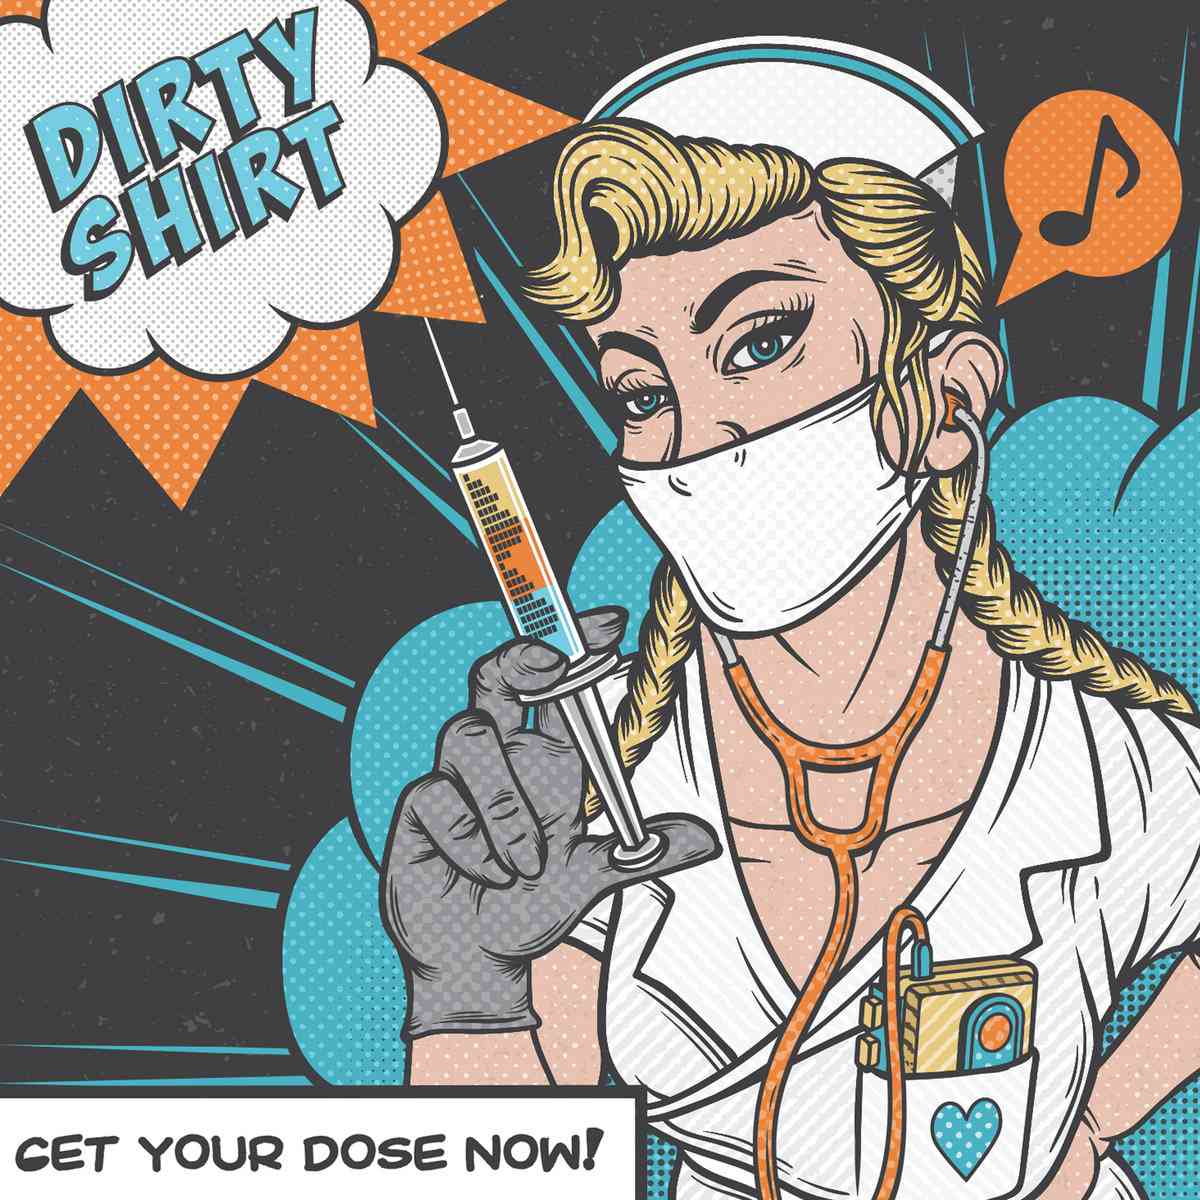 Dirty shirt - Get Your Dose Now - album cover